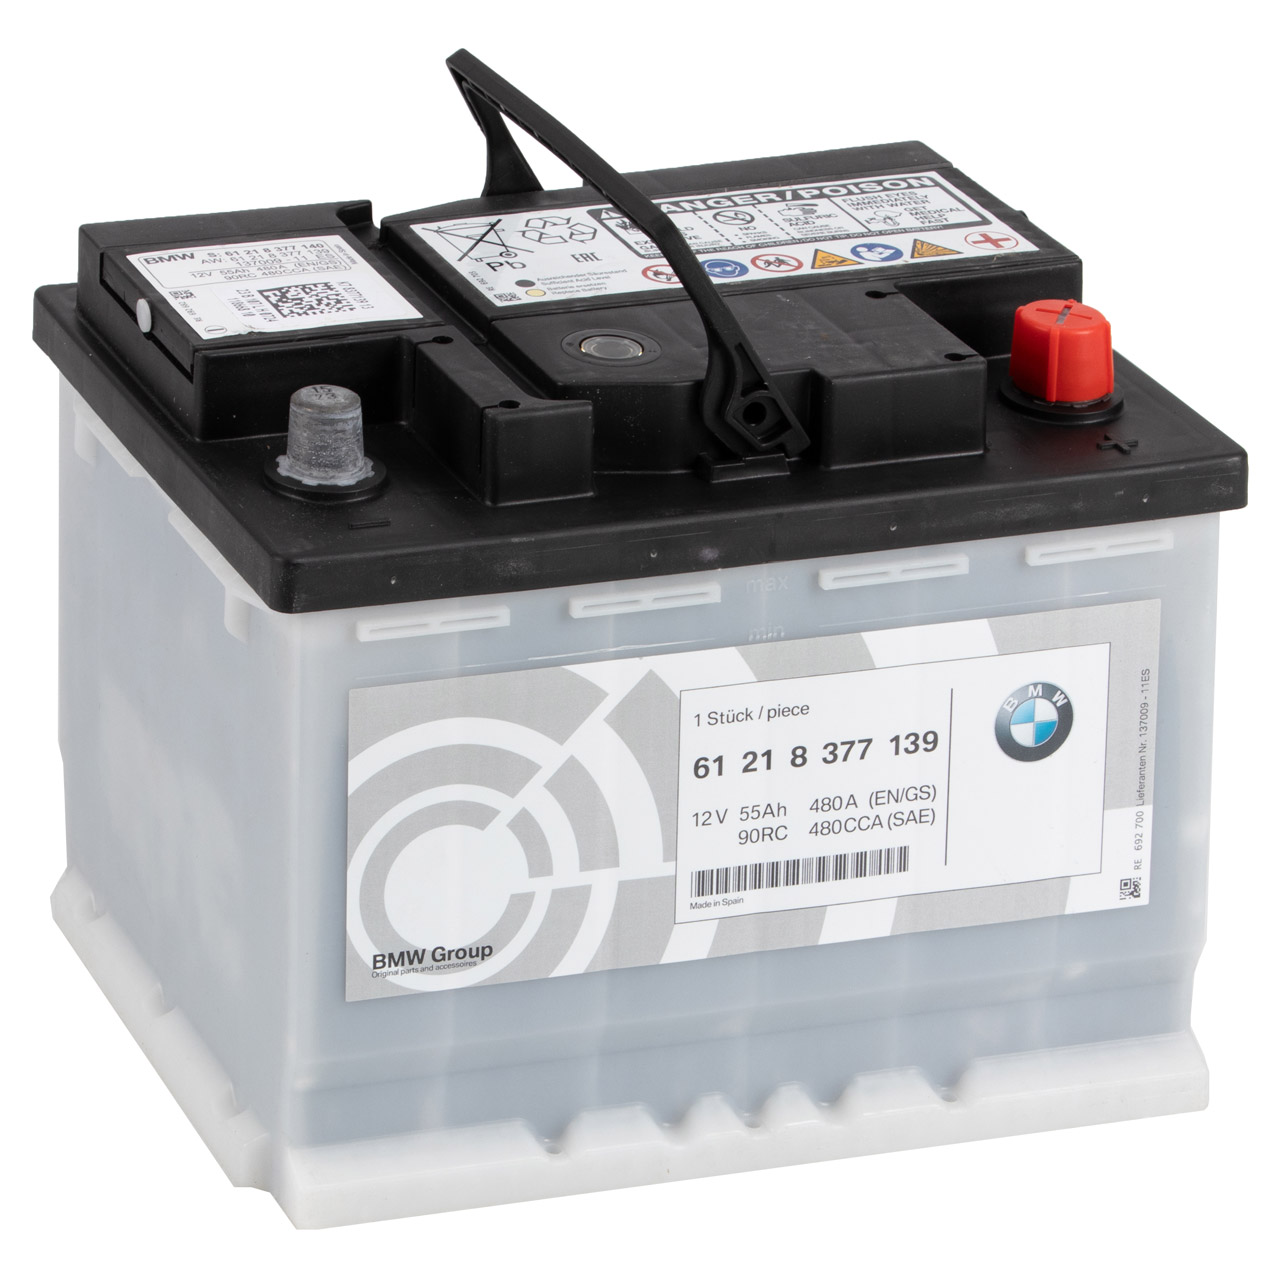 ORIGINAL BMW Autobatterie Batterie Starterbatterie 12V 55Ah 480A 61218377139